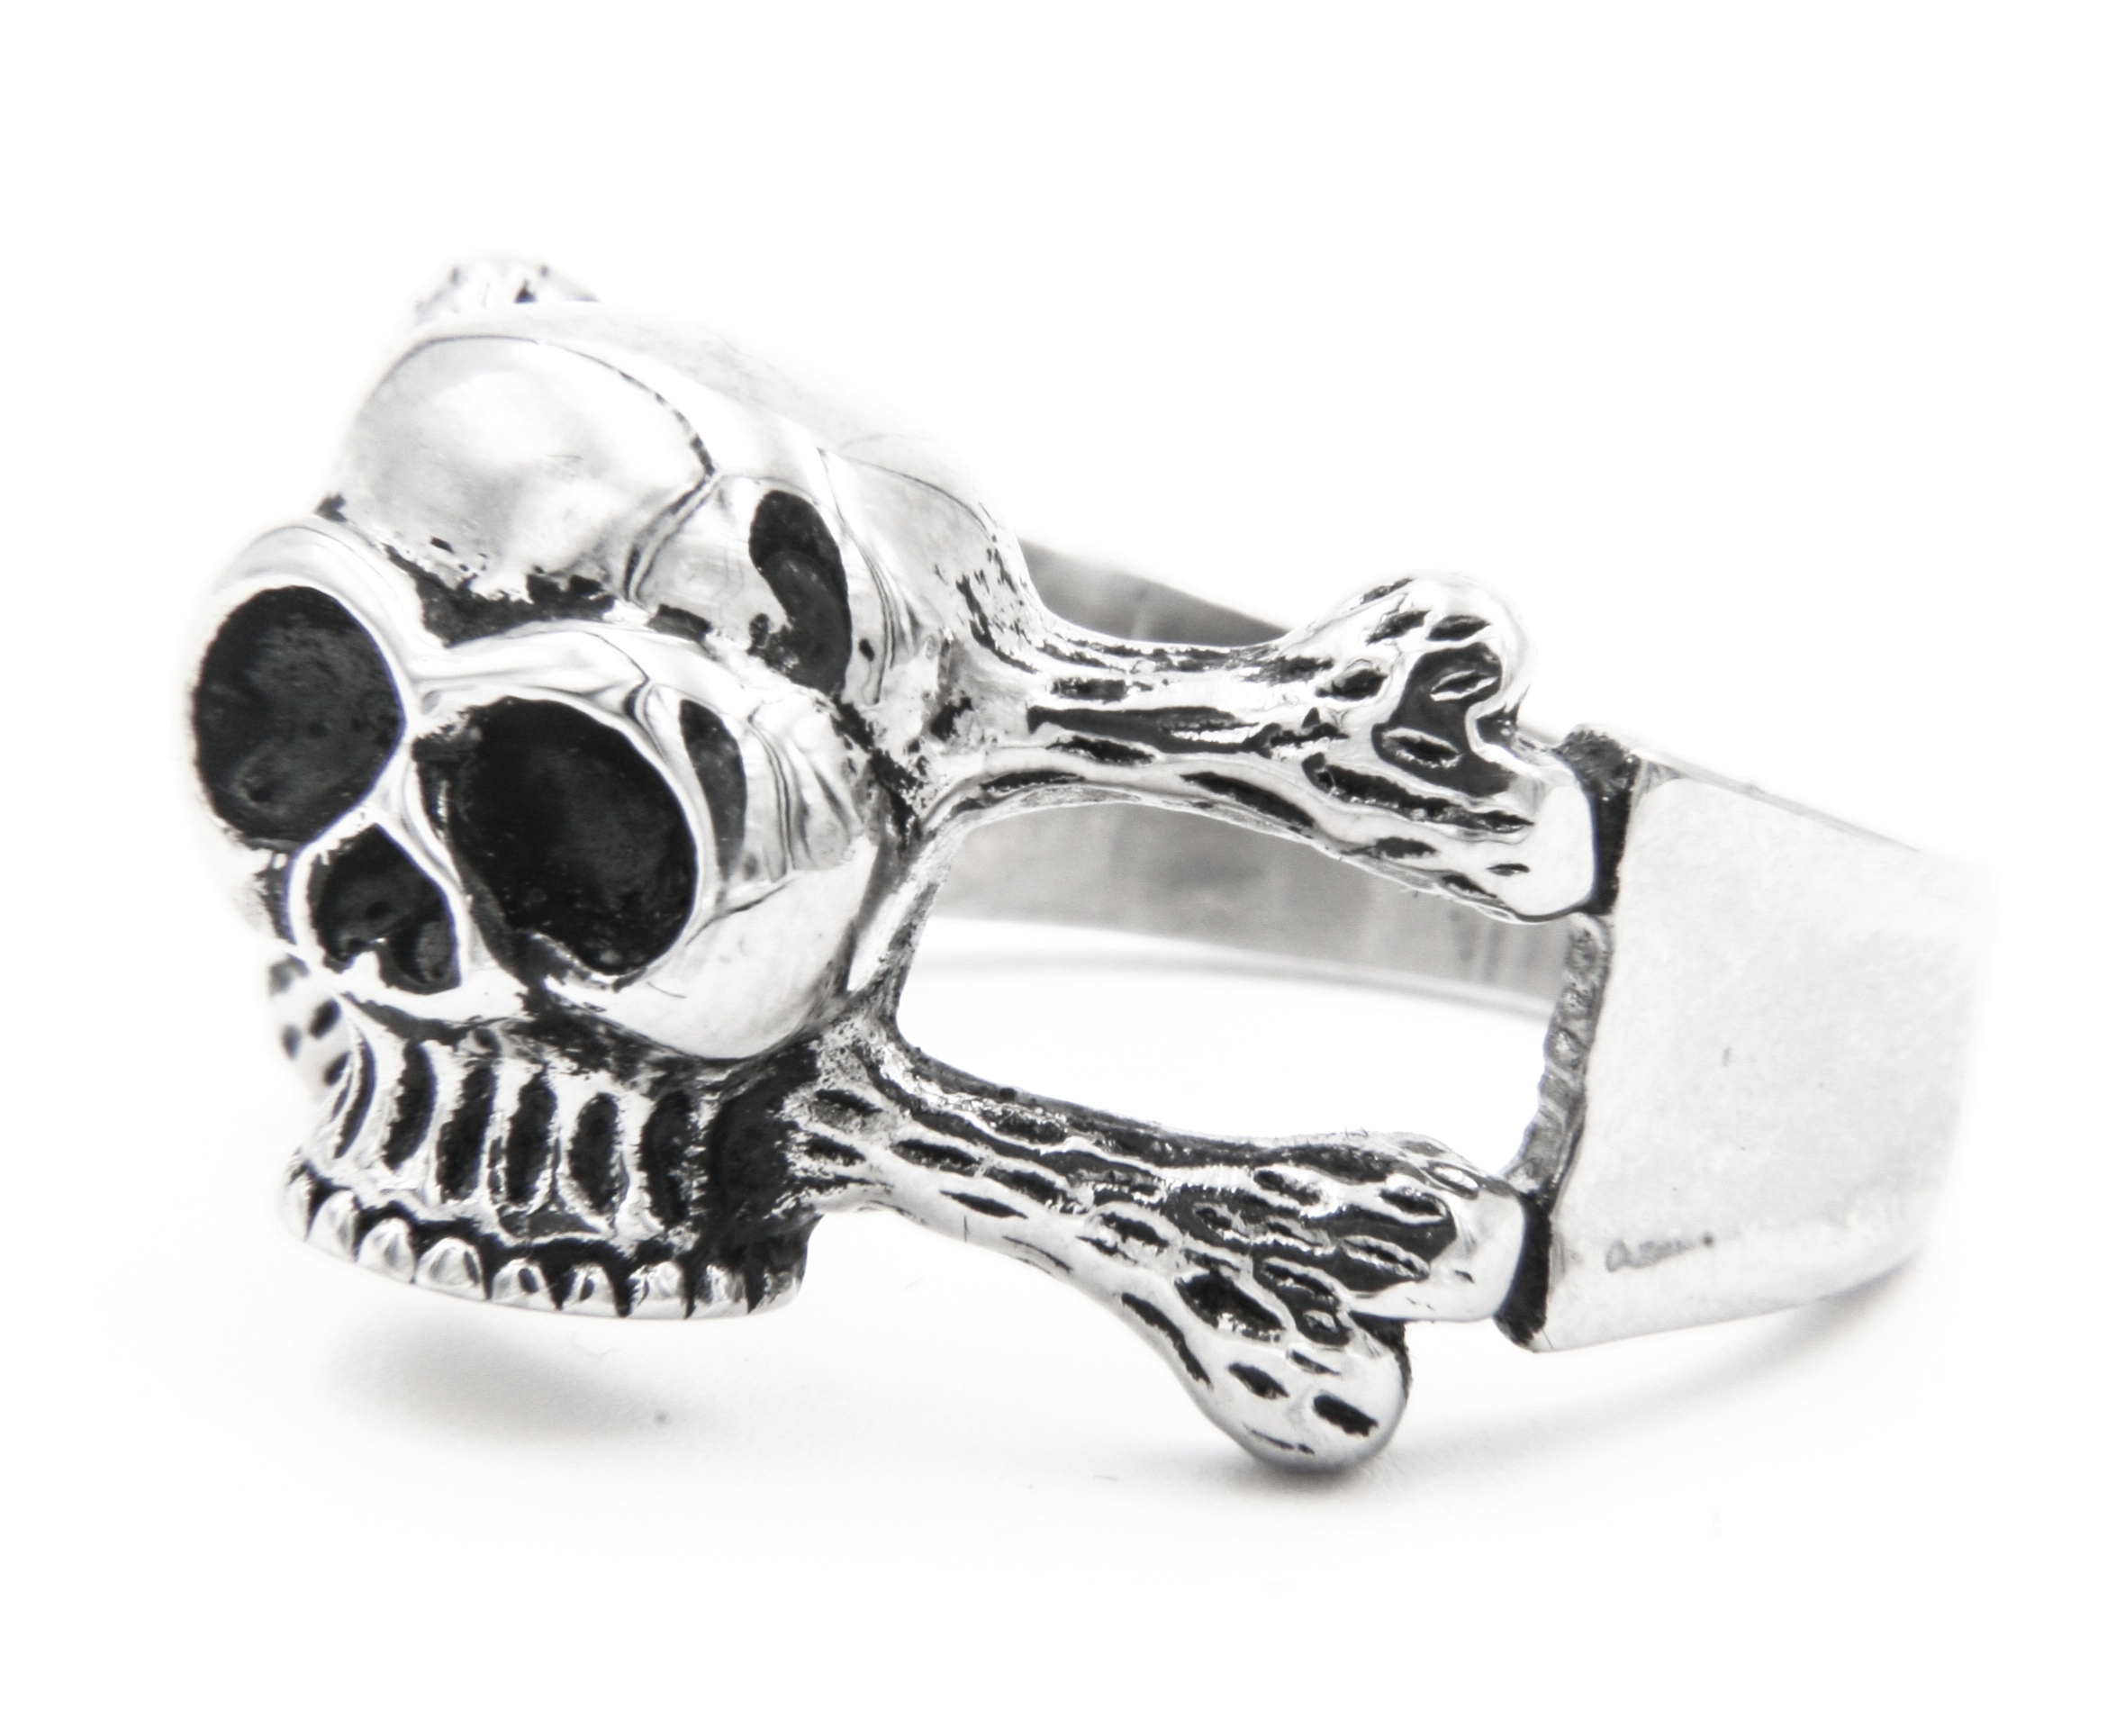 Shioyonge Buy Memento Mori Skull Sterling Silver Ring at Ubuy India